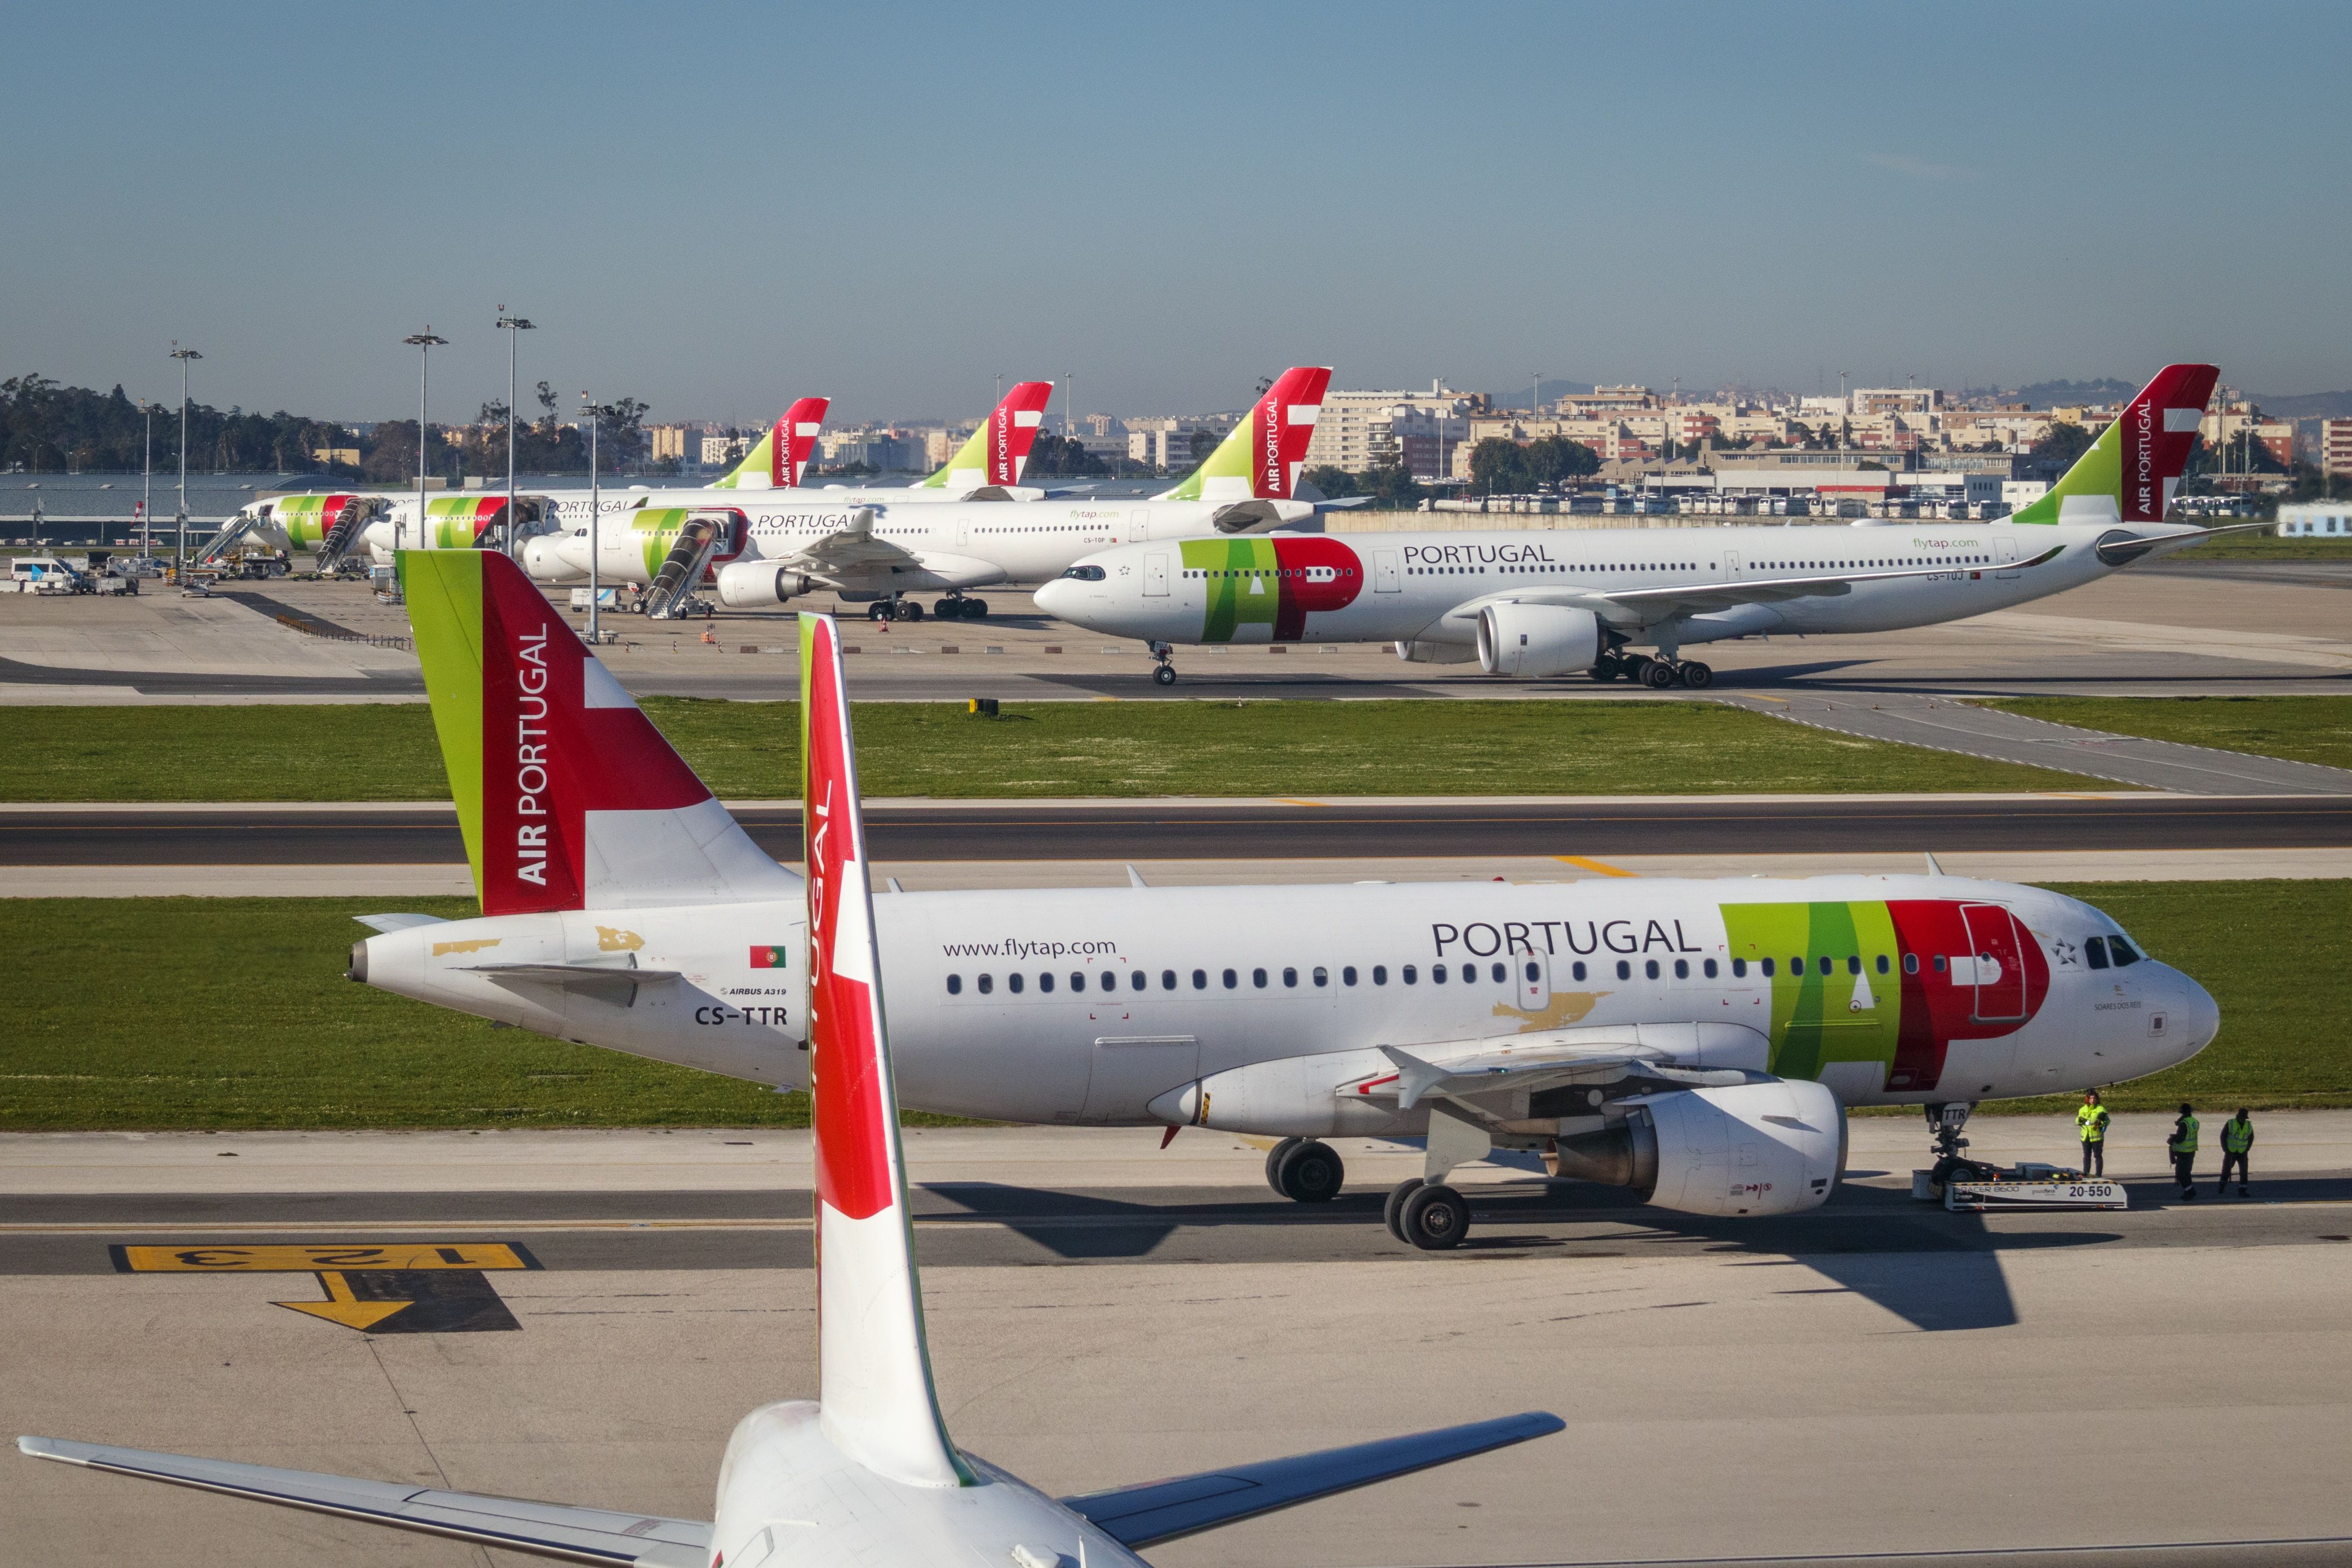 TAP Air Portugal aircraft at Lisbon Airport LIS shutterstock_1629969472